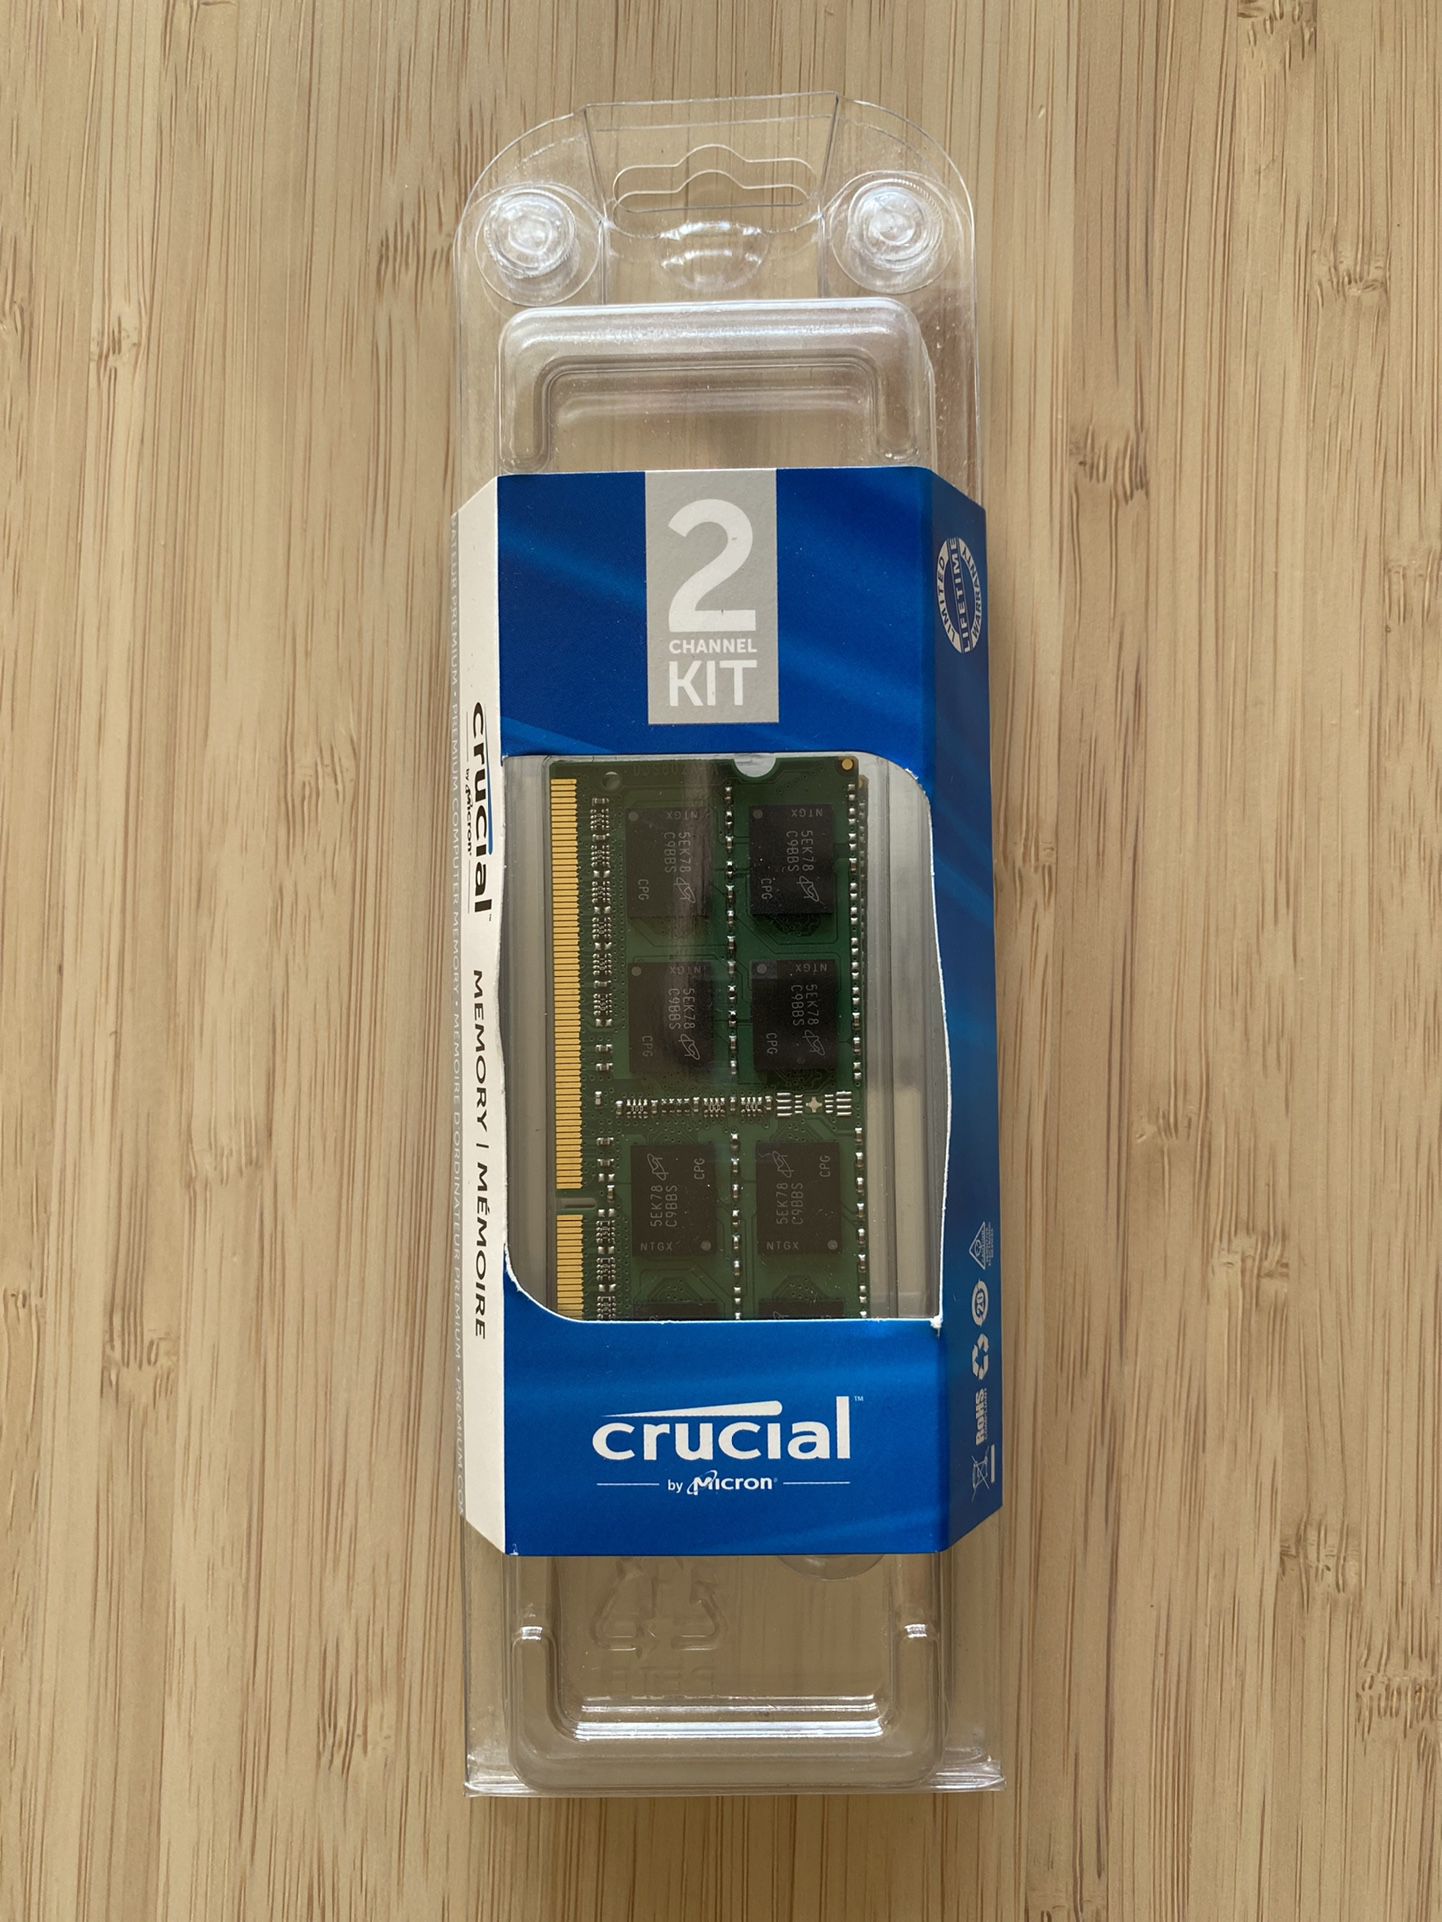 Crucial 2GB Single DDR3/DDR3L 1600 MT/S (PC3-12800) Unbuffered SODIMM 204-Pin Memory - CT25664BF160B